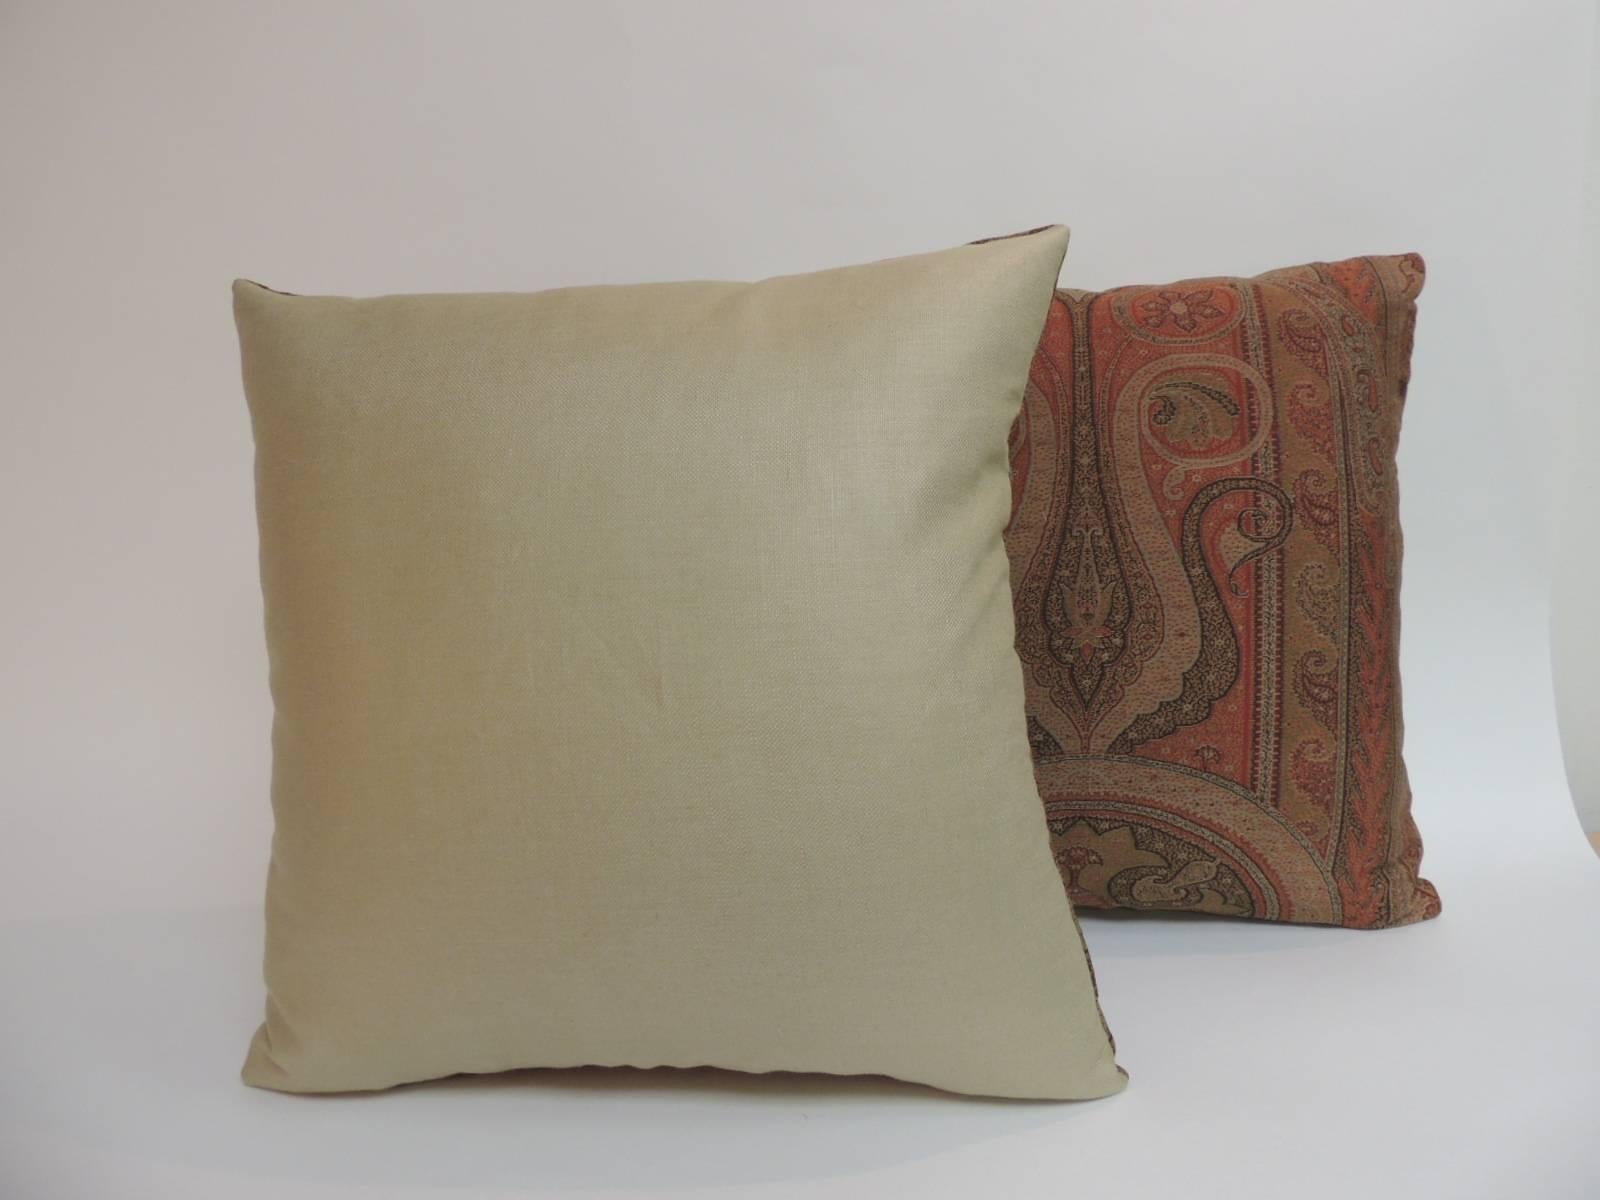 English Pair of 19th Century Kashmir Woven Paisley Decorative Pillows